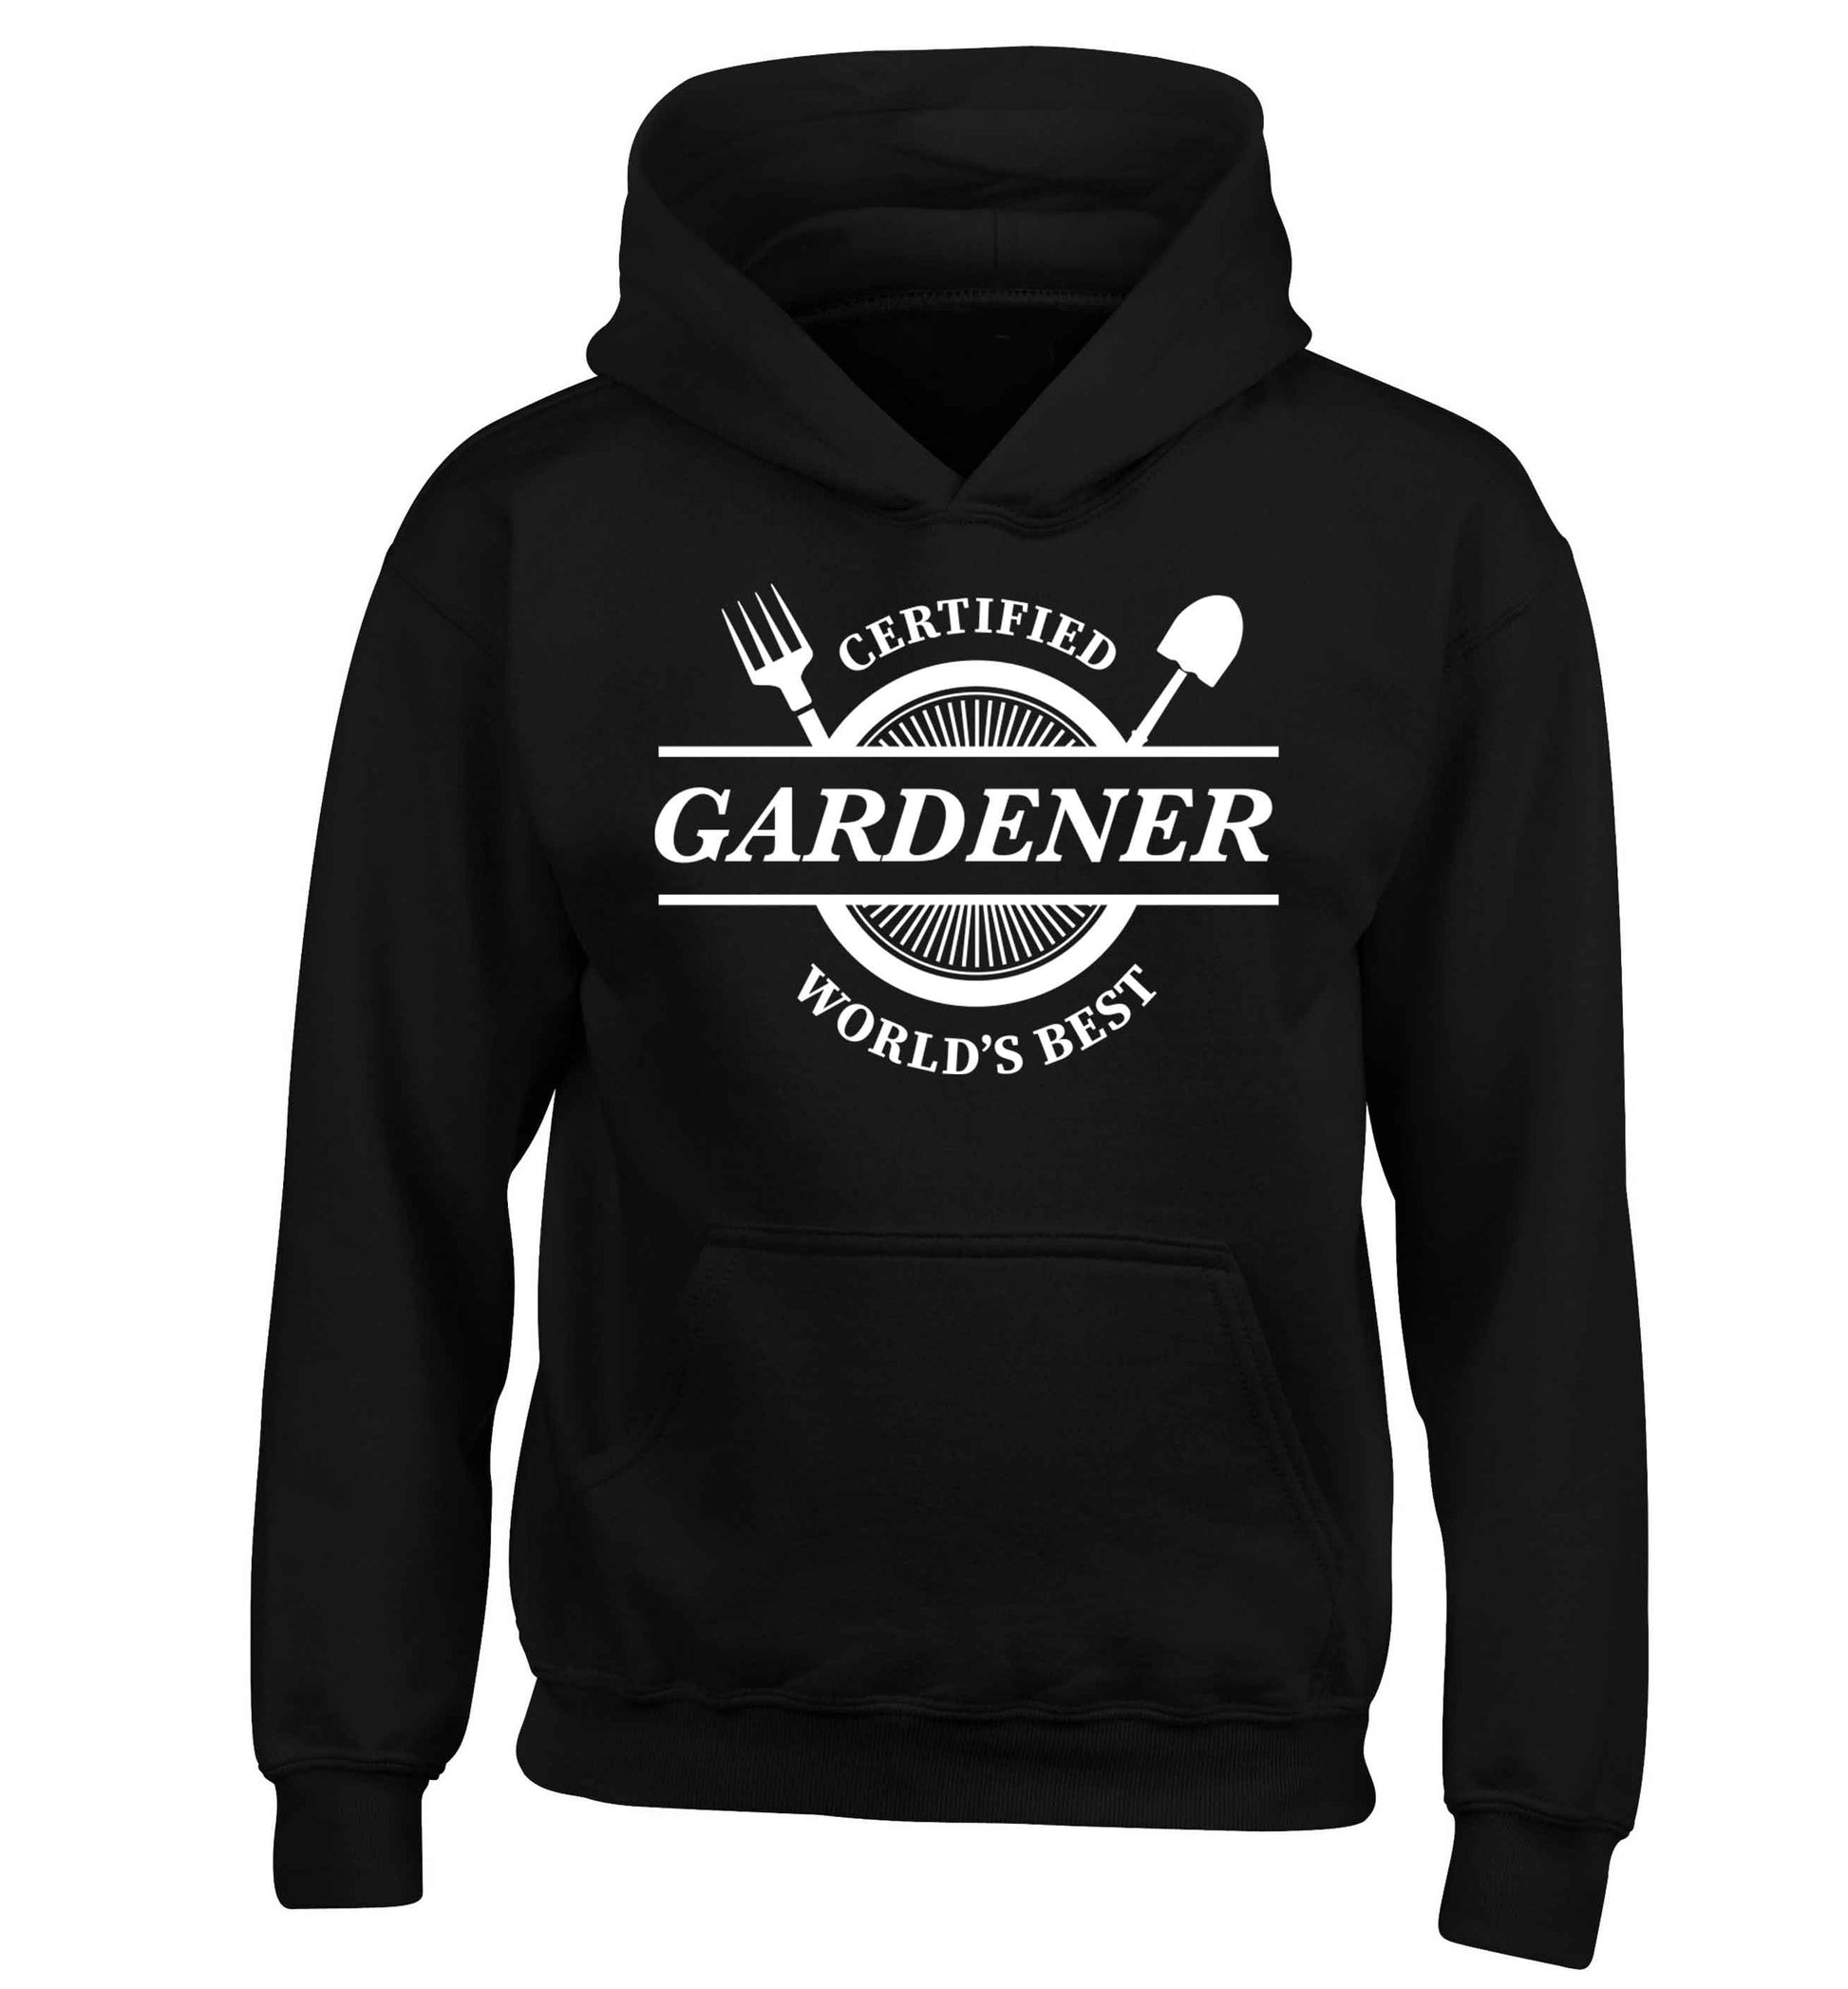 Certified gardener worlds best children's black hoodie 12-13 Years